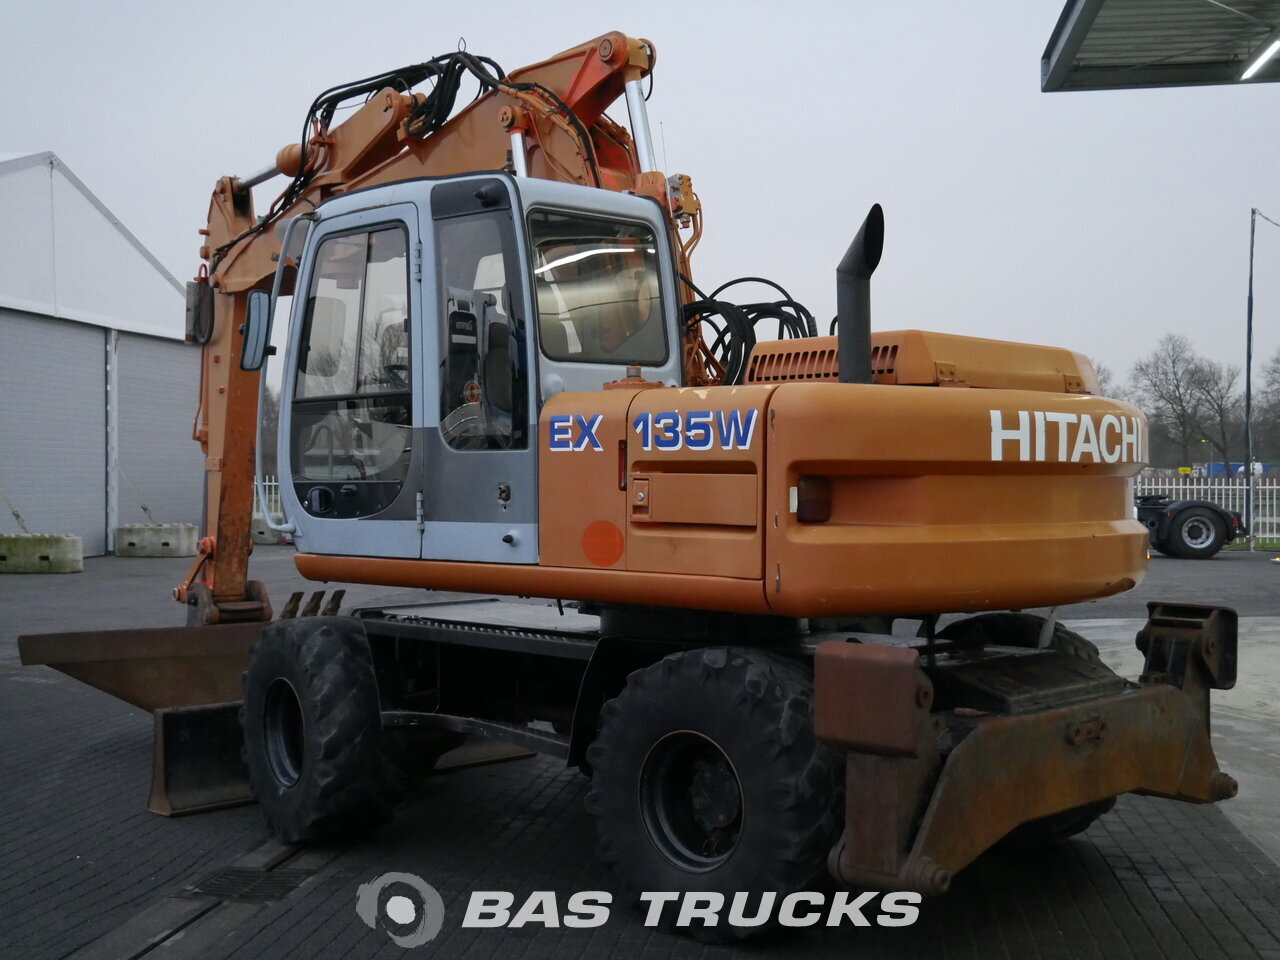 Hitachi EX 135 W Construction equipment Euro norm 0 €17950 - BAS Trucks